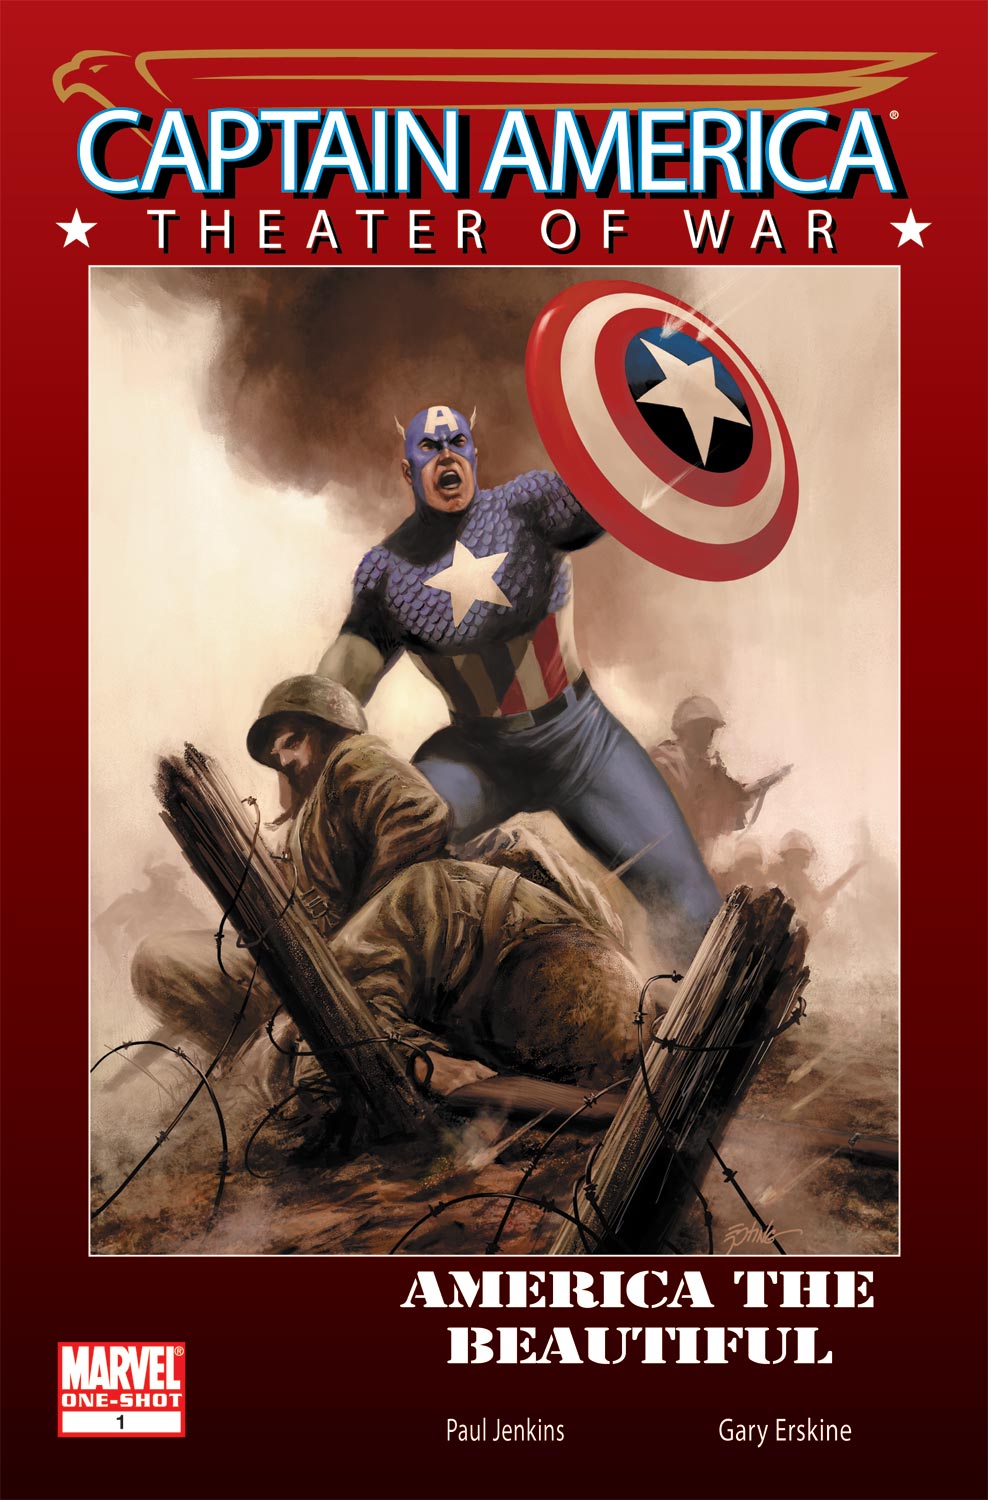 Captain America Theater of War: America the Beautiful (2009) #1